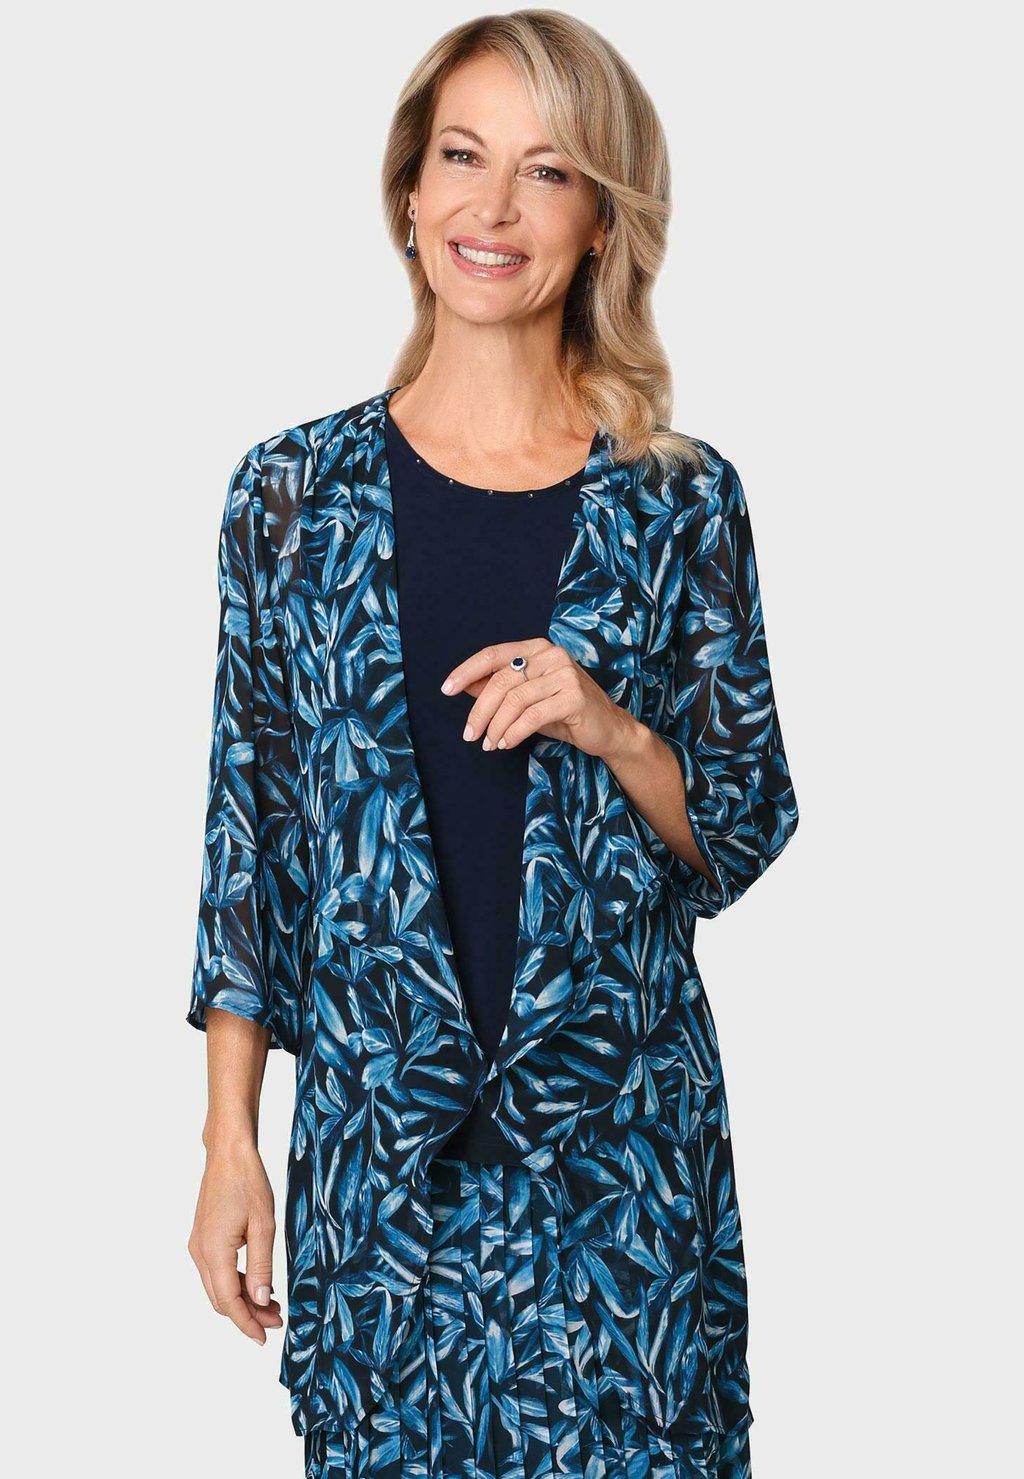 Летняя куртка GOLDNER patterned knitwear women s standing collar ivy patterned short coat dark navy blue colored details stylish posture modern desig